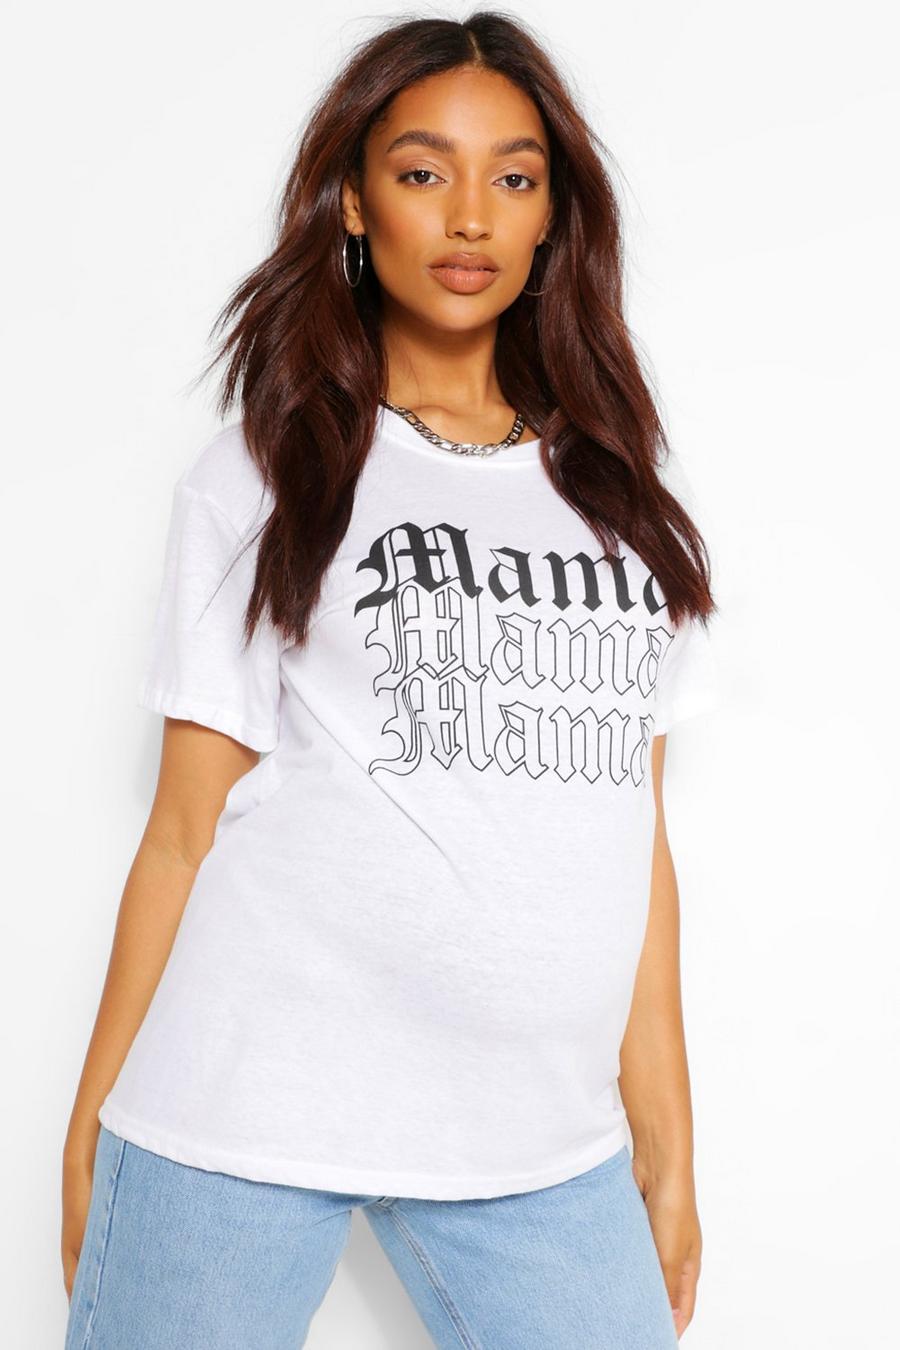 Camiseta premamá con eslogan de mamá image number 1